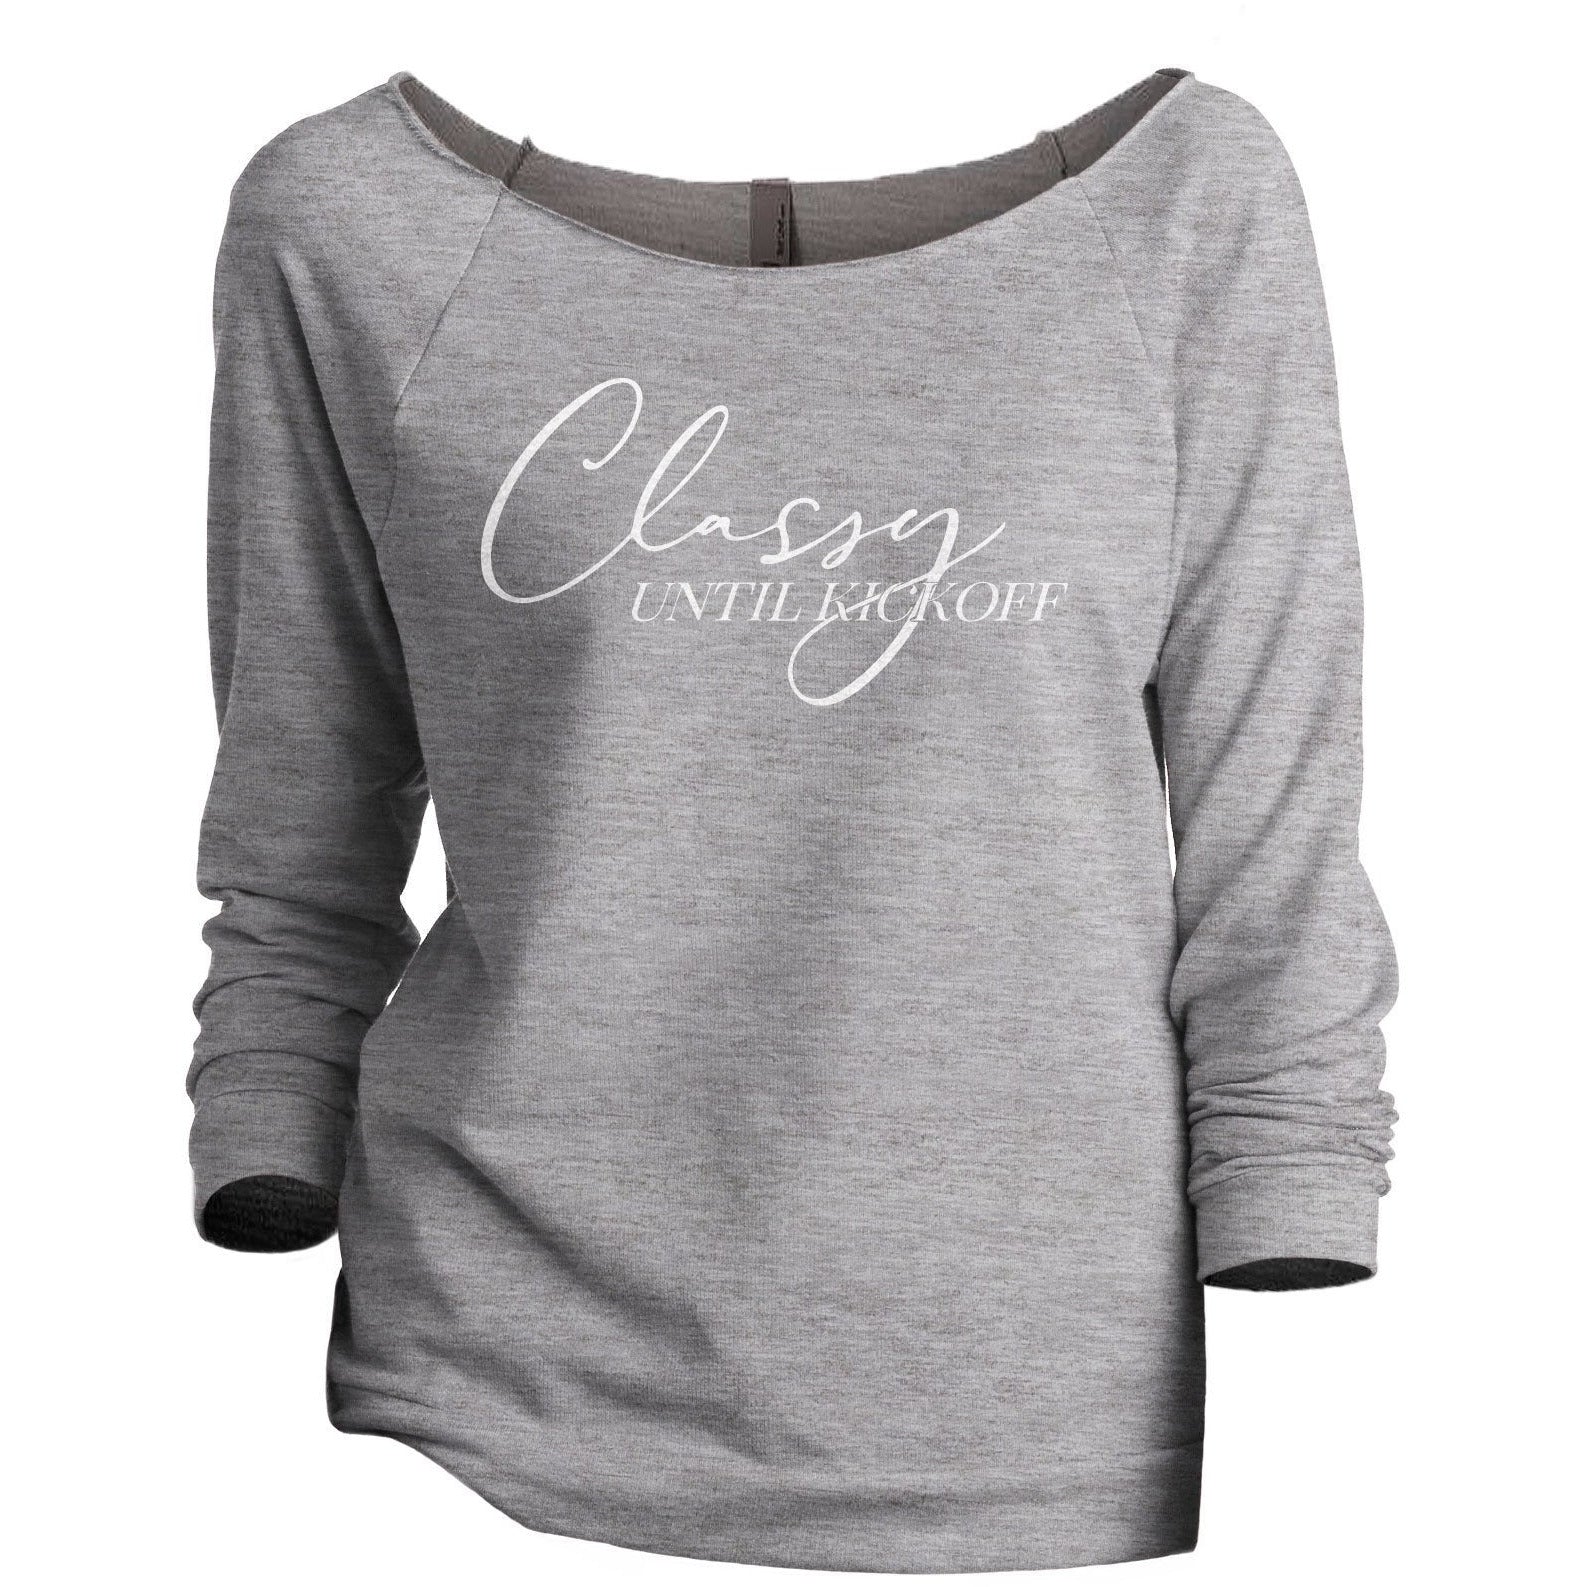 Classy Until Kickoff Women's Graphic Printed Lightweight Slouchy 3/4 Sleeves Sweatshirt Sport Grey